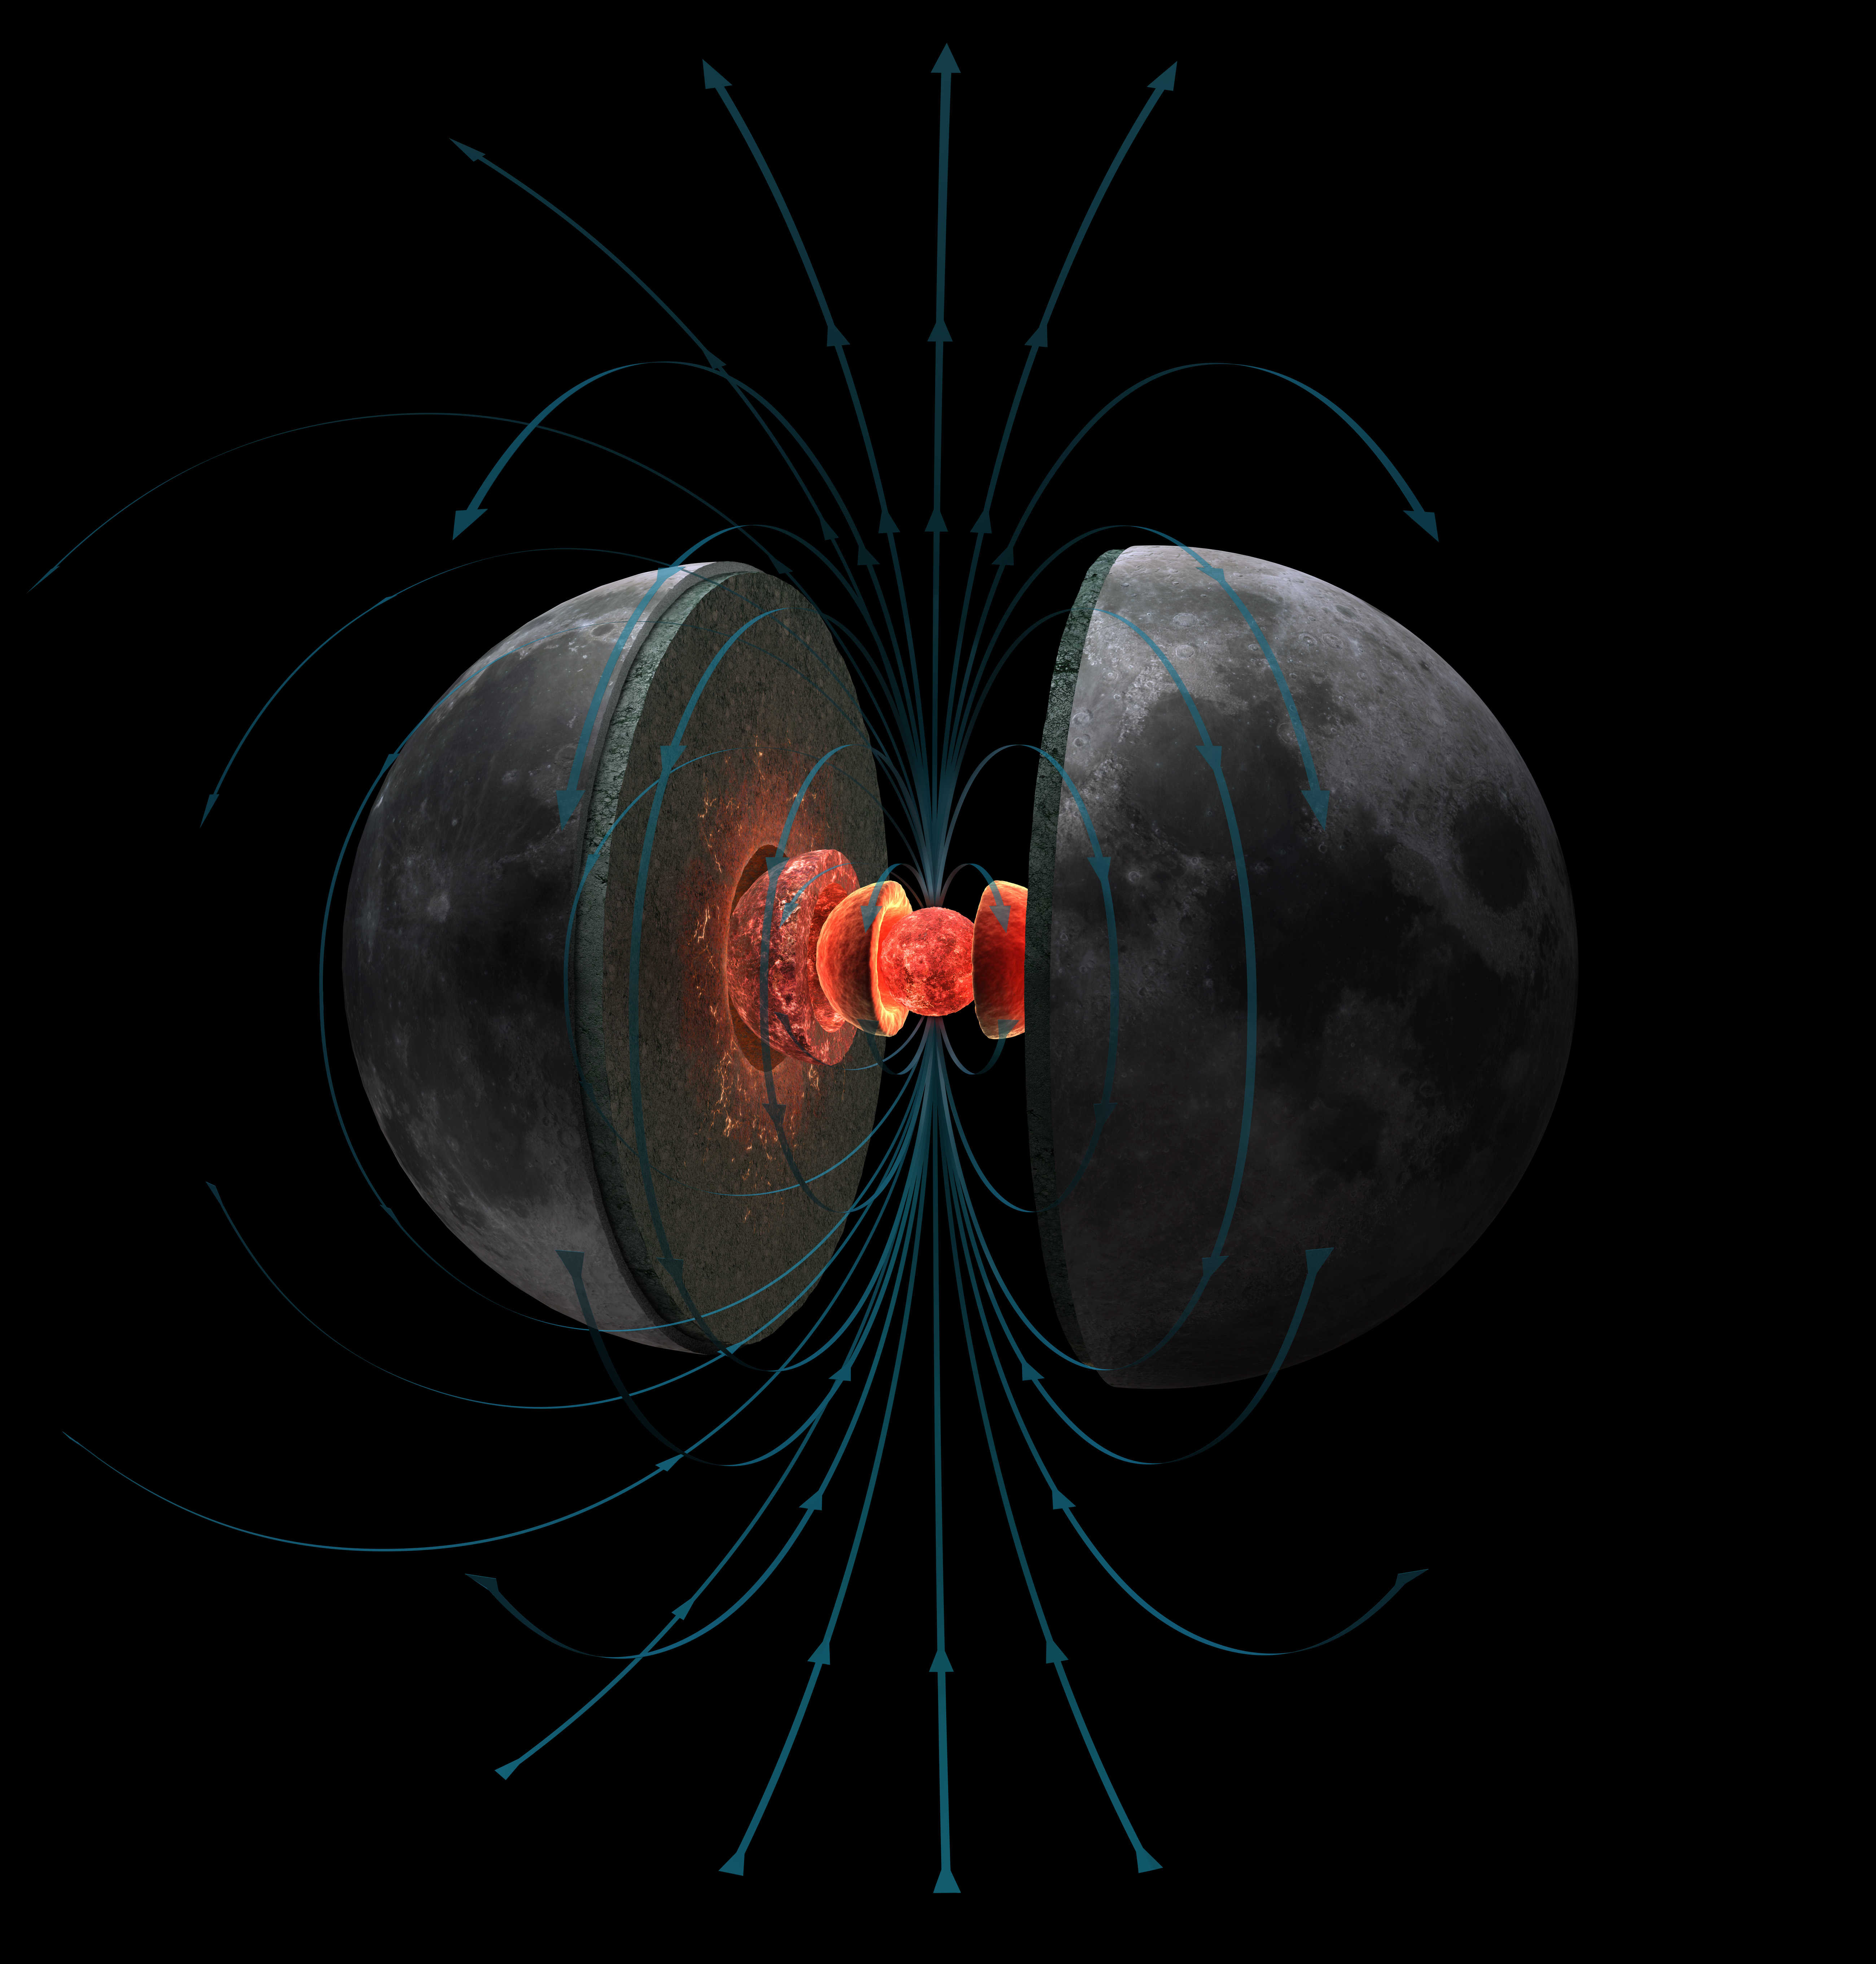 Illustration of the Moon's magnetic field. Image credit: Hernan Canellas / MIT Paleomagnetism Laboratory.